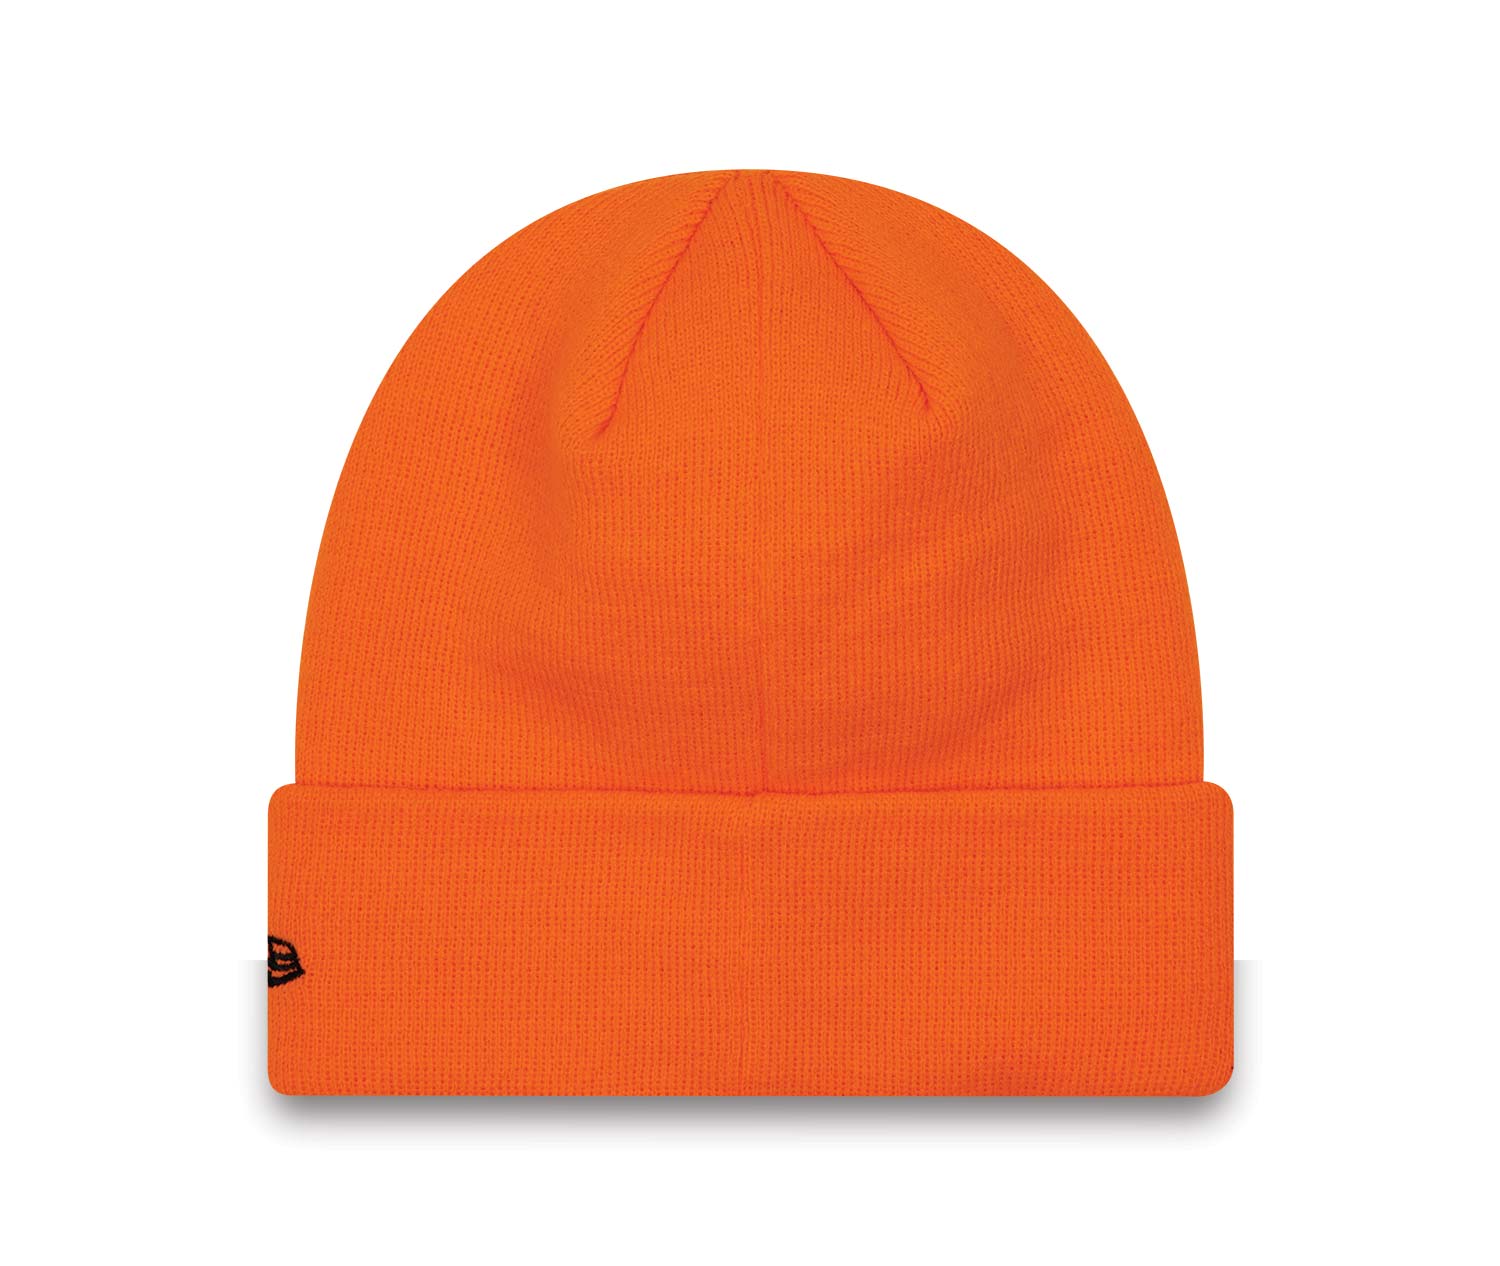 LA Dodgers Neon Bright Orange Cuff Beanie Hat